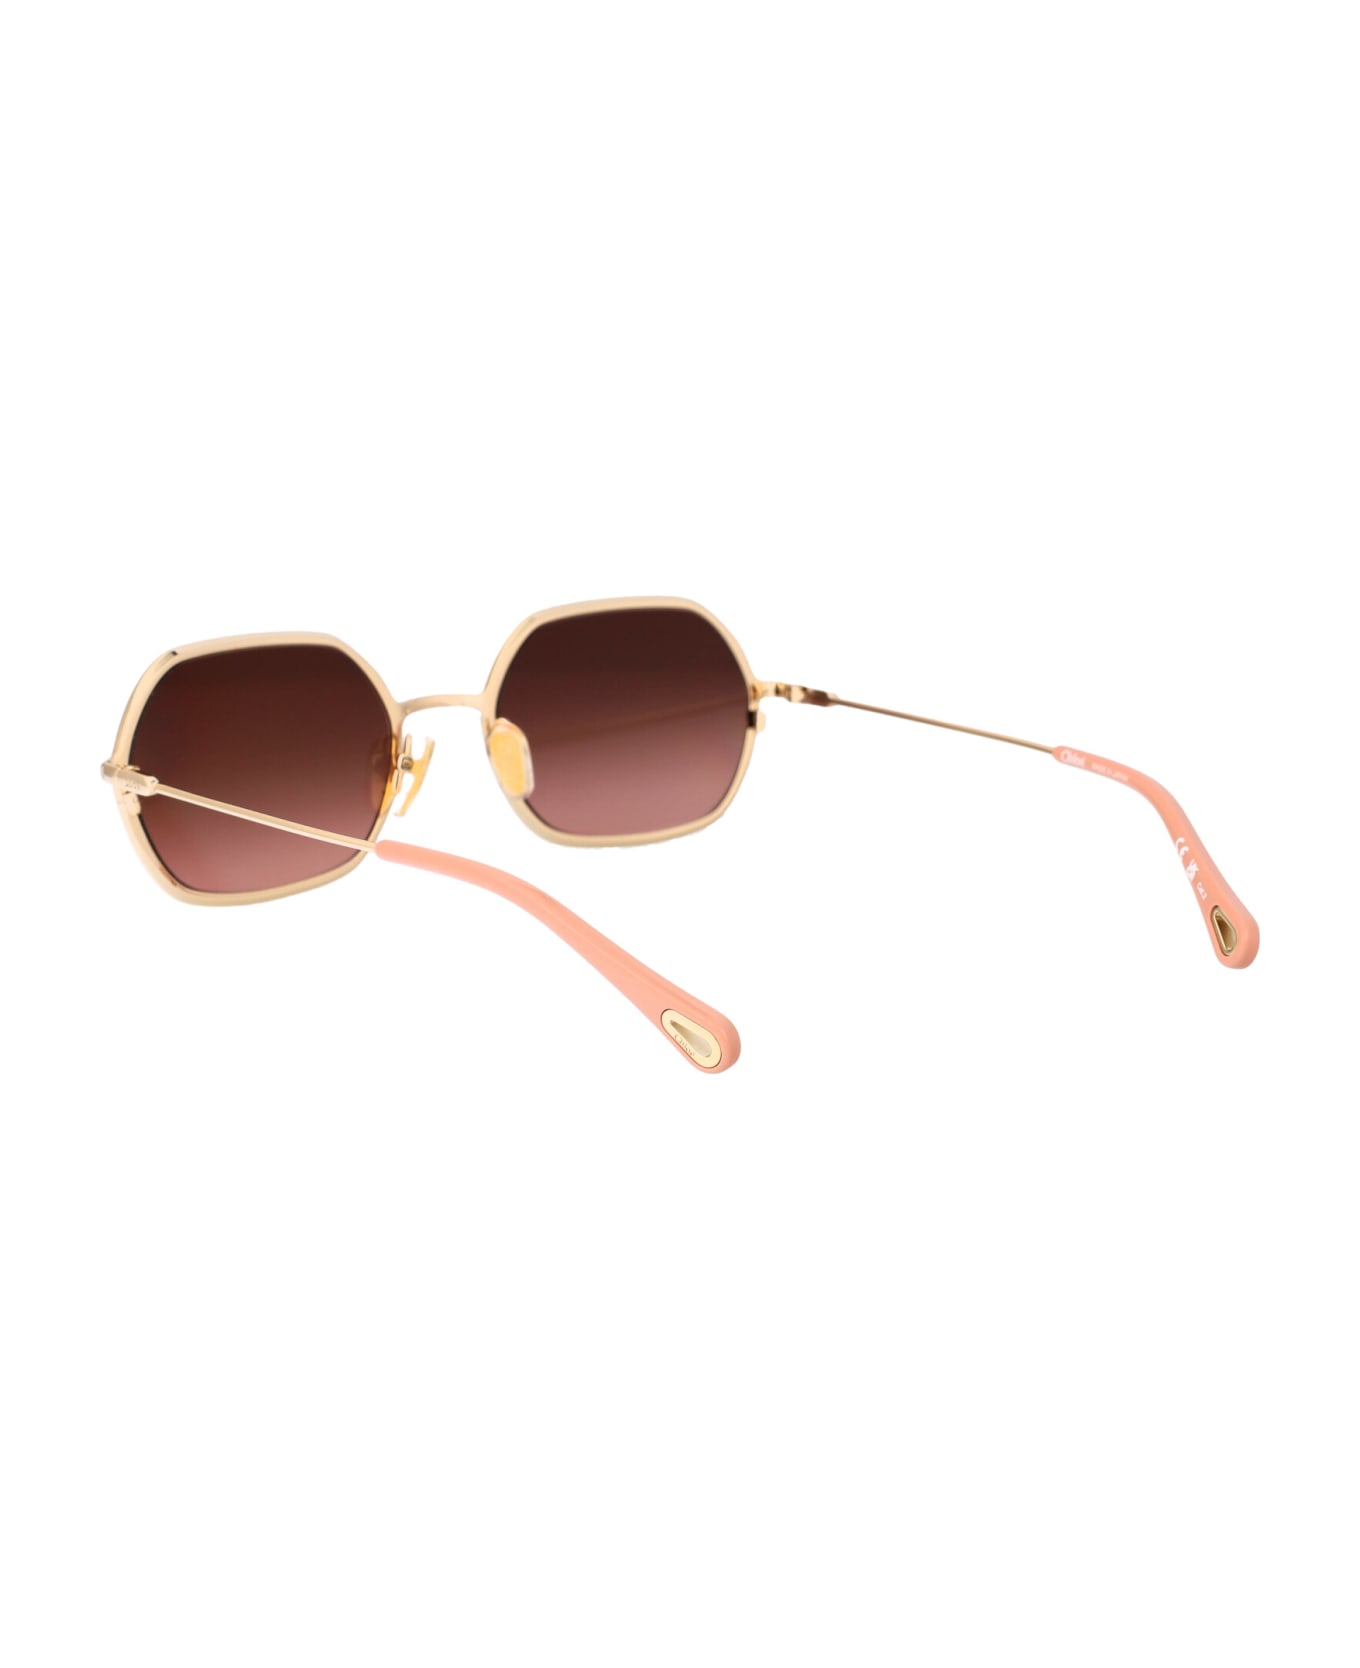 Chloé Eyewear Ch0231s Sunglasses - 002 GOLD GOLD COPPER